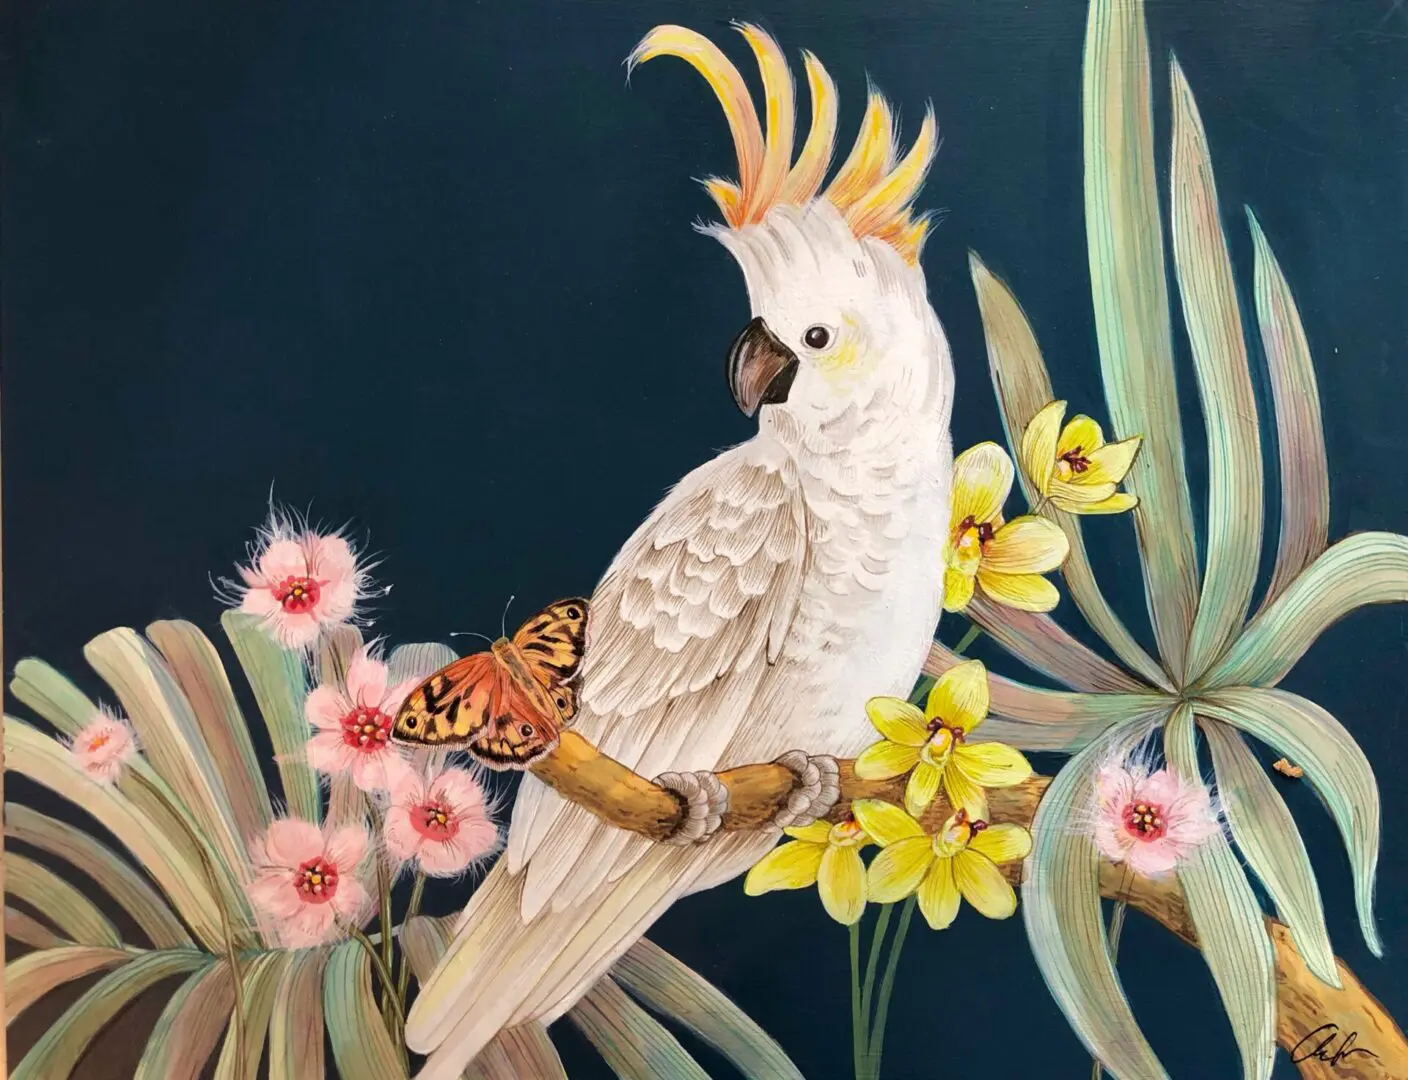 Cockatoo Party by Allison Cosmos